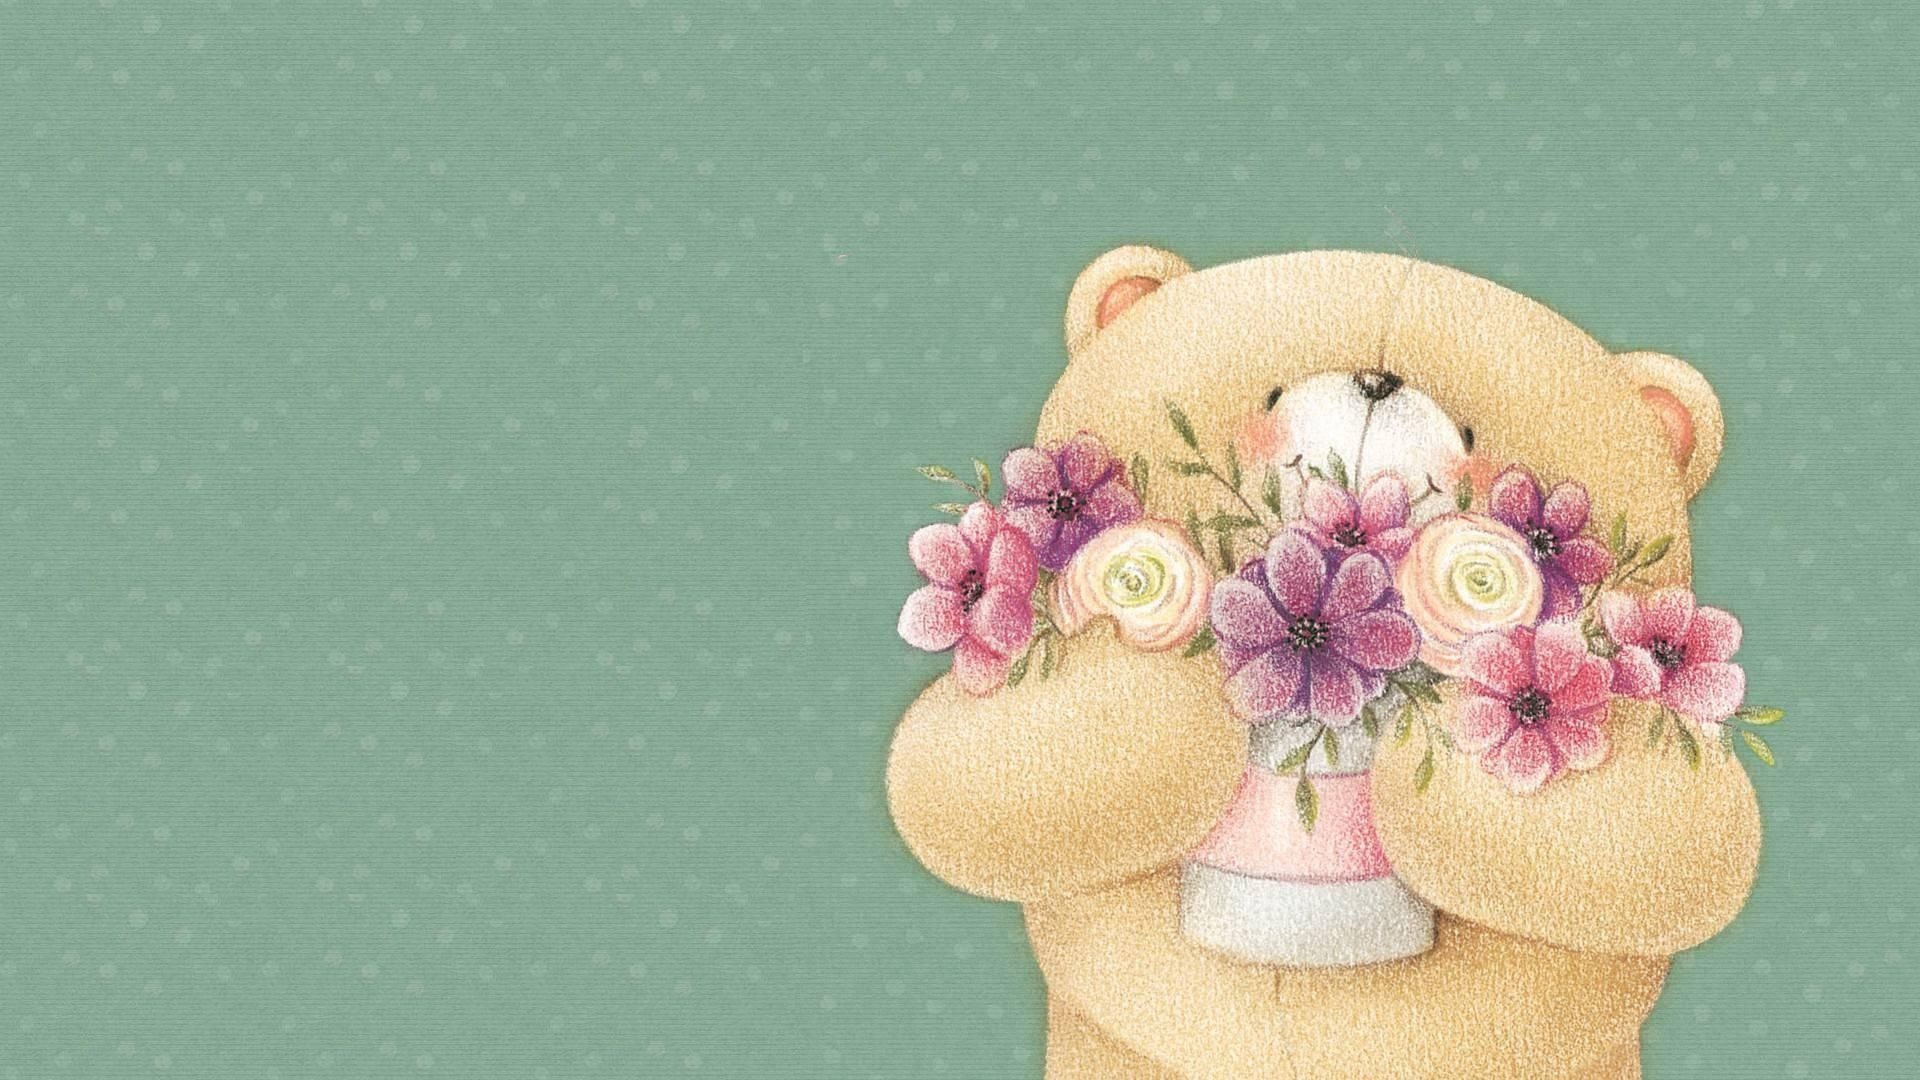 Forever Friends Bear desktop wallpaper free download